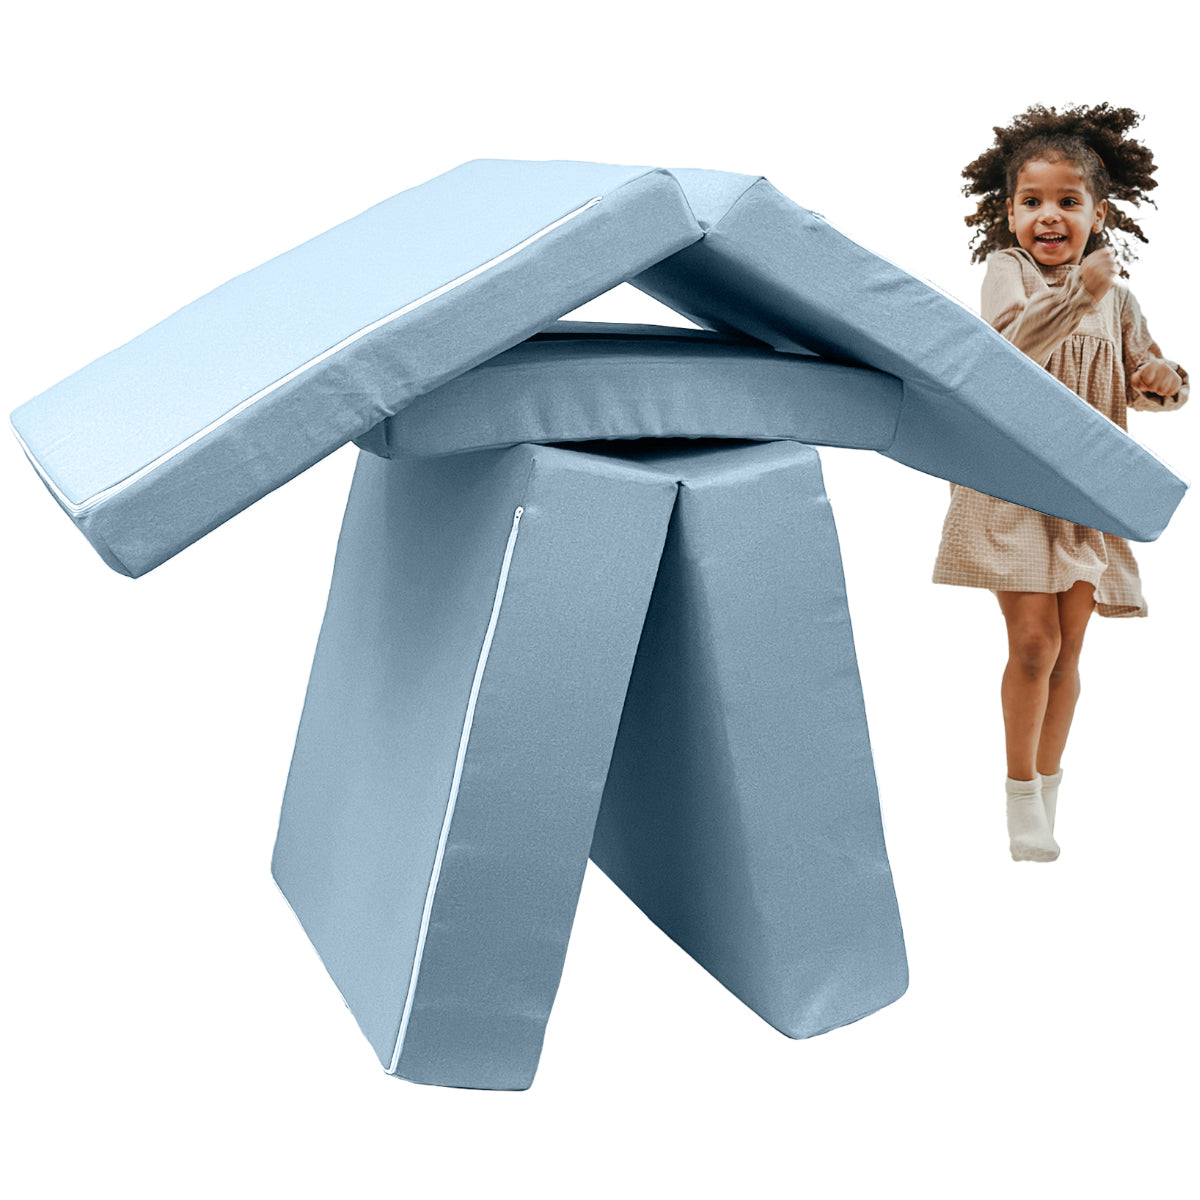 RIWI play couch building blocks inside playgroups kindergarten soft foam blocks xxl